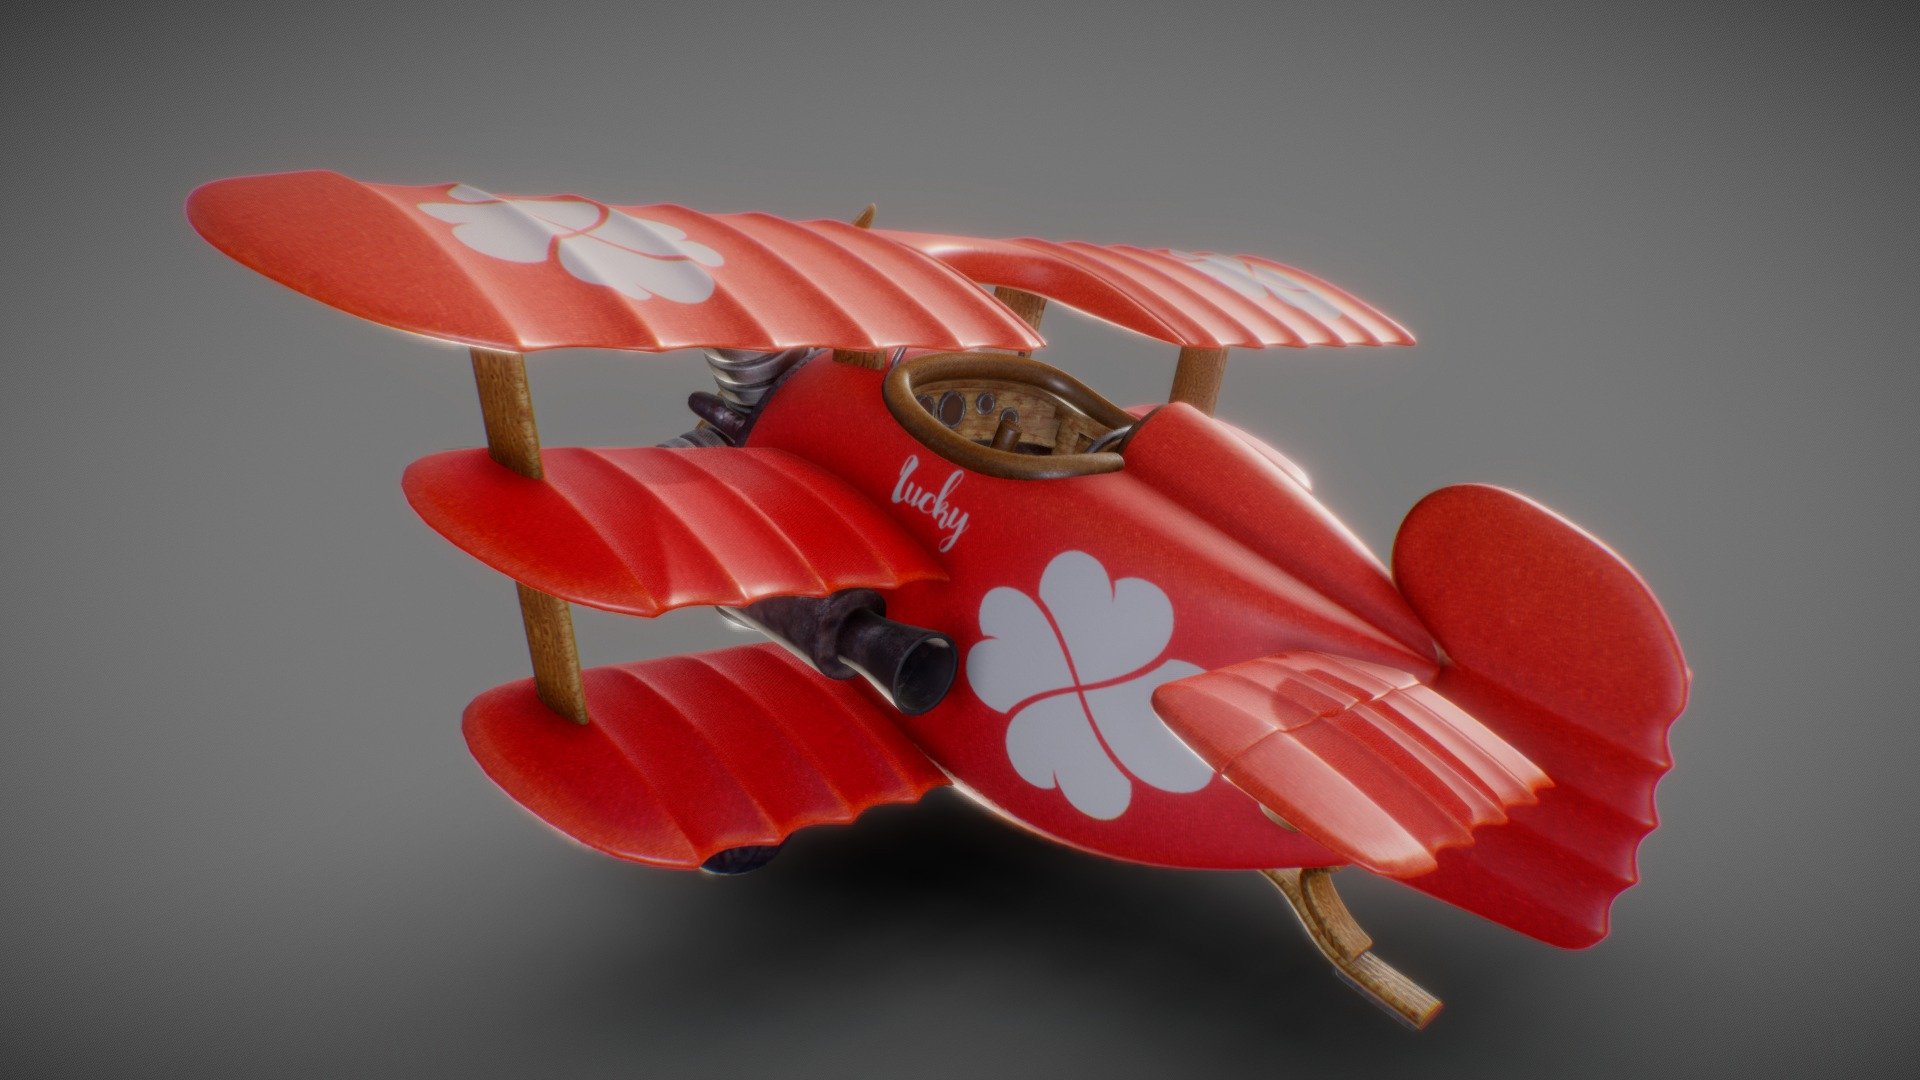 Cute &amp; Little stylized tri-plane.
Quick weekend project 3d model